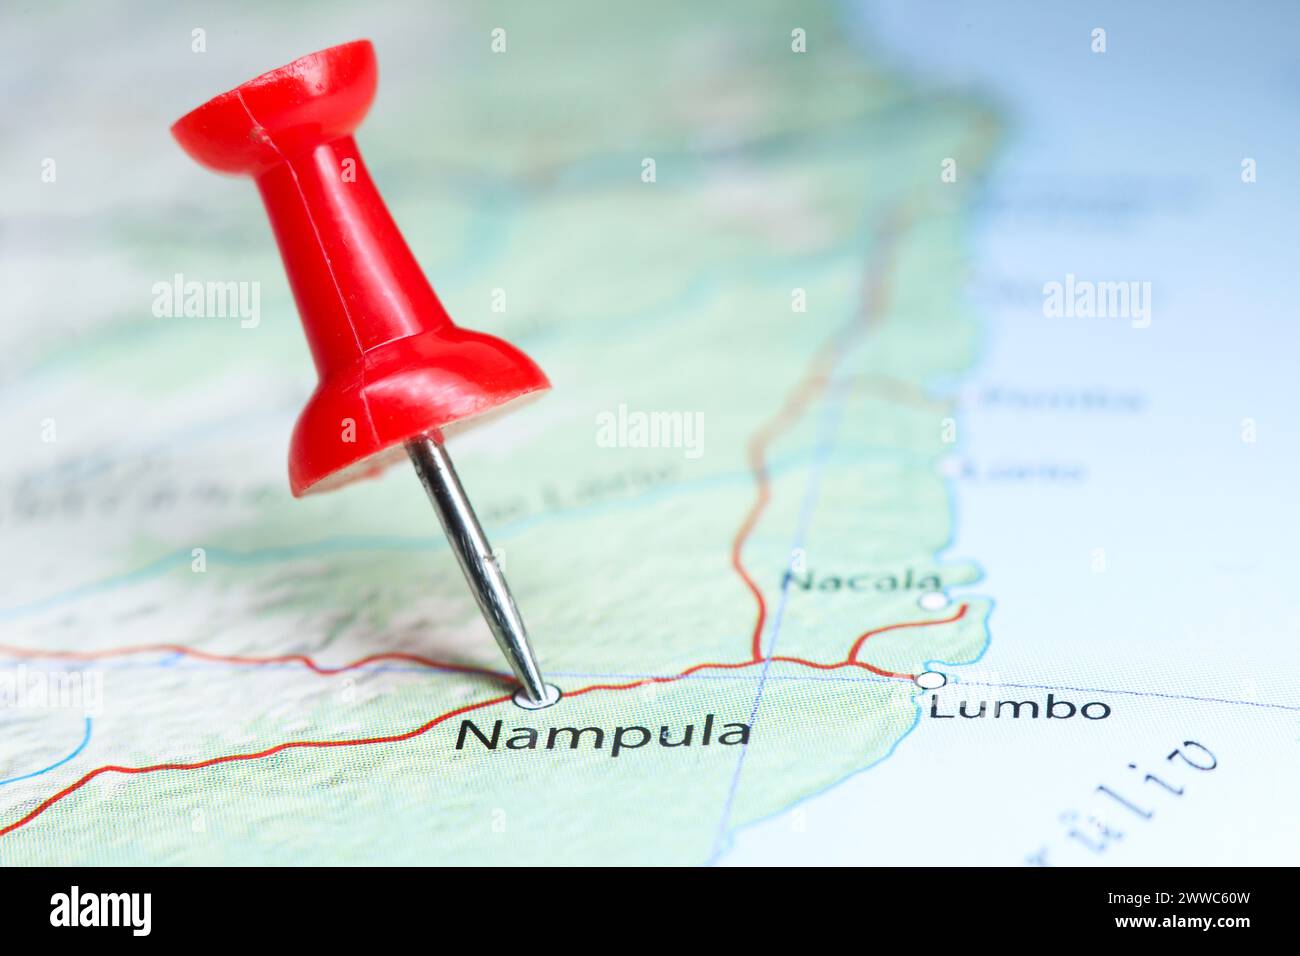 Nampula, Mozambique pin on map Stock Photo